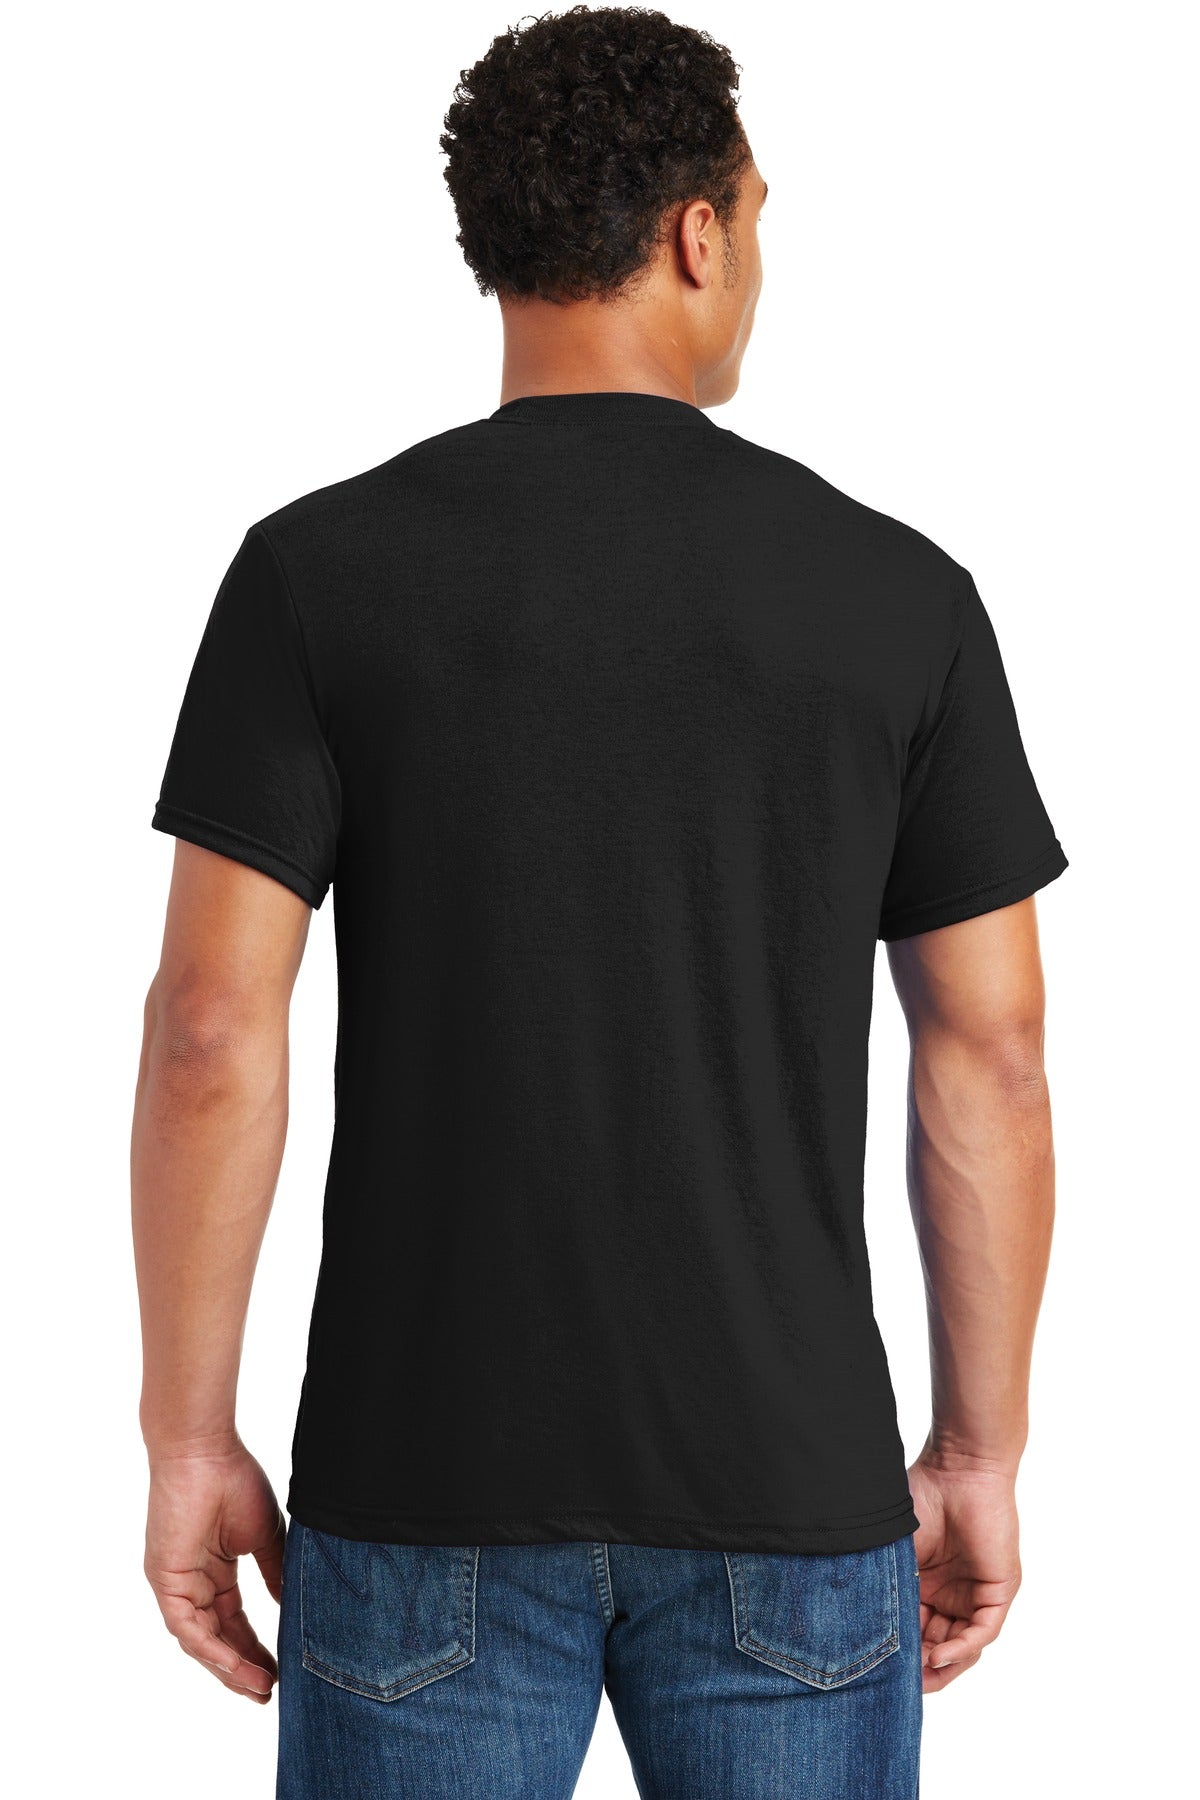 Jerzees Dri-Power 100% Polyester T-Shirt. 21M